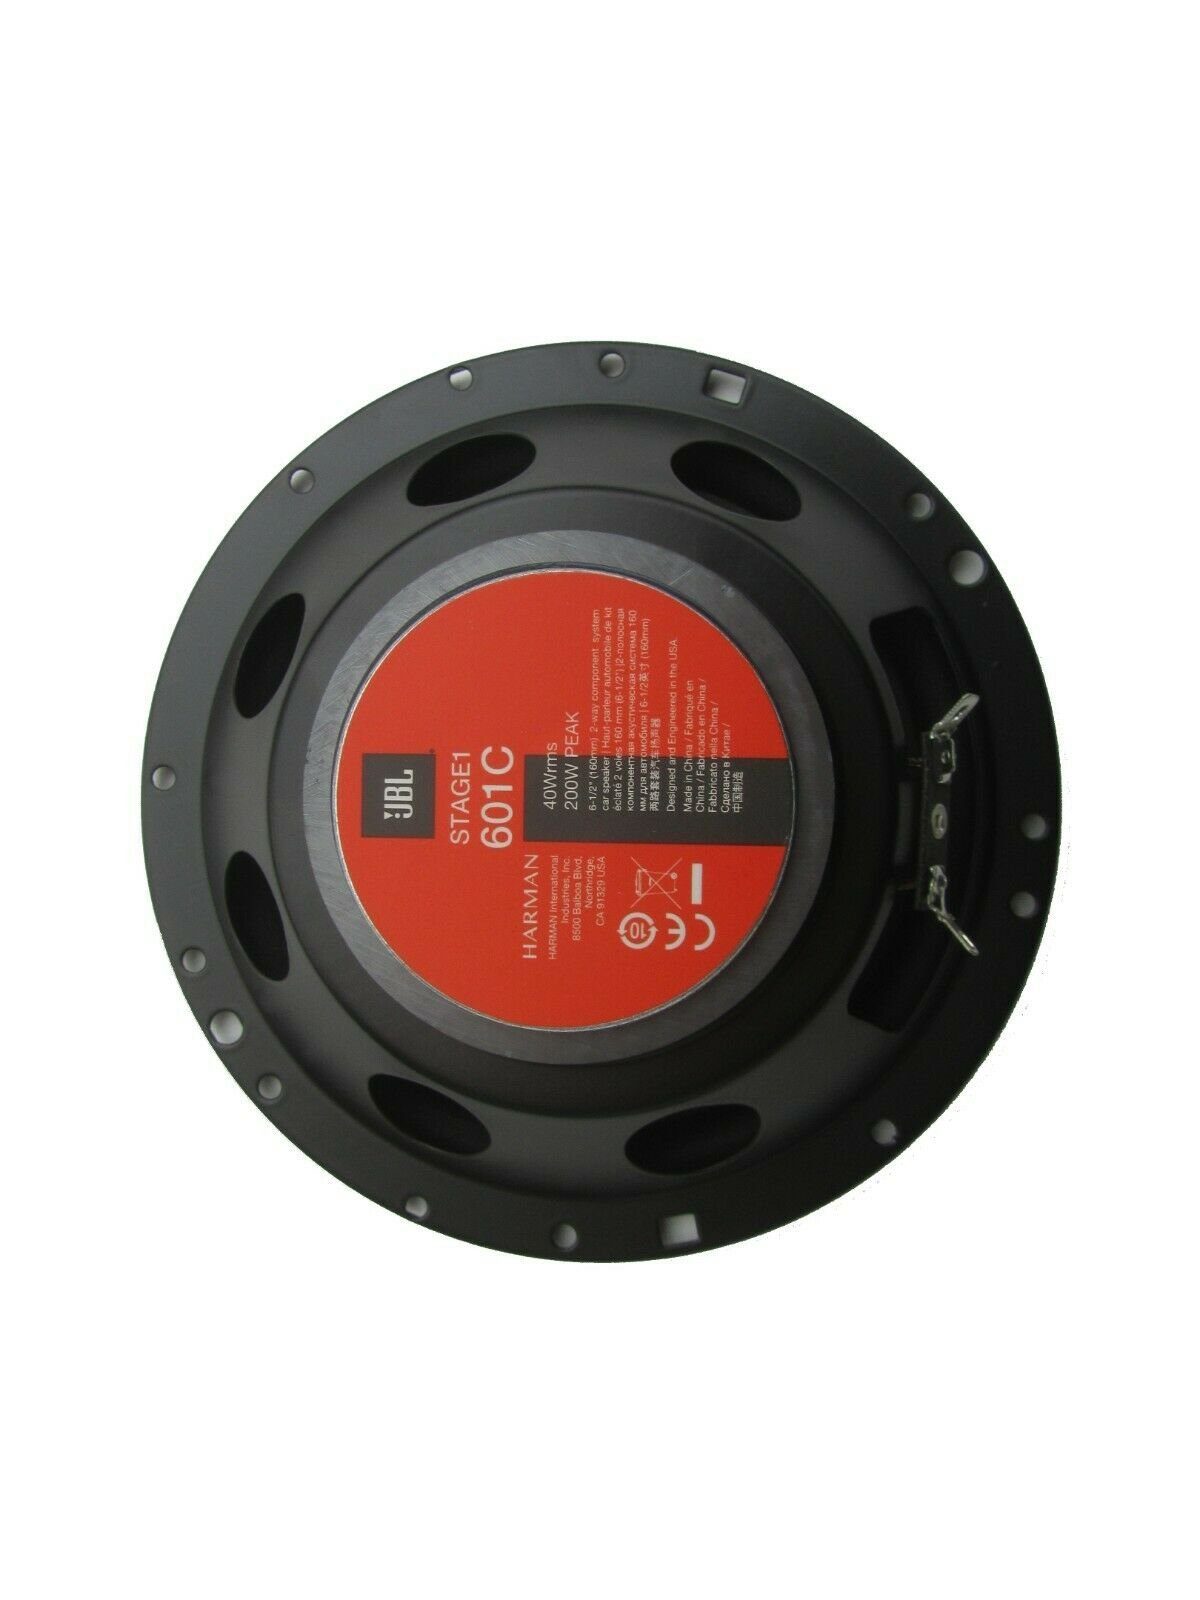 komponenten 3G Lautsprecher Auto-Lautsprecher Passat W) für (40 JBL DSX B8 VW